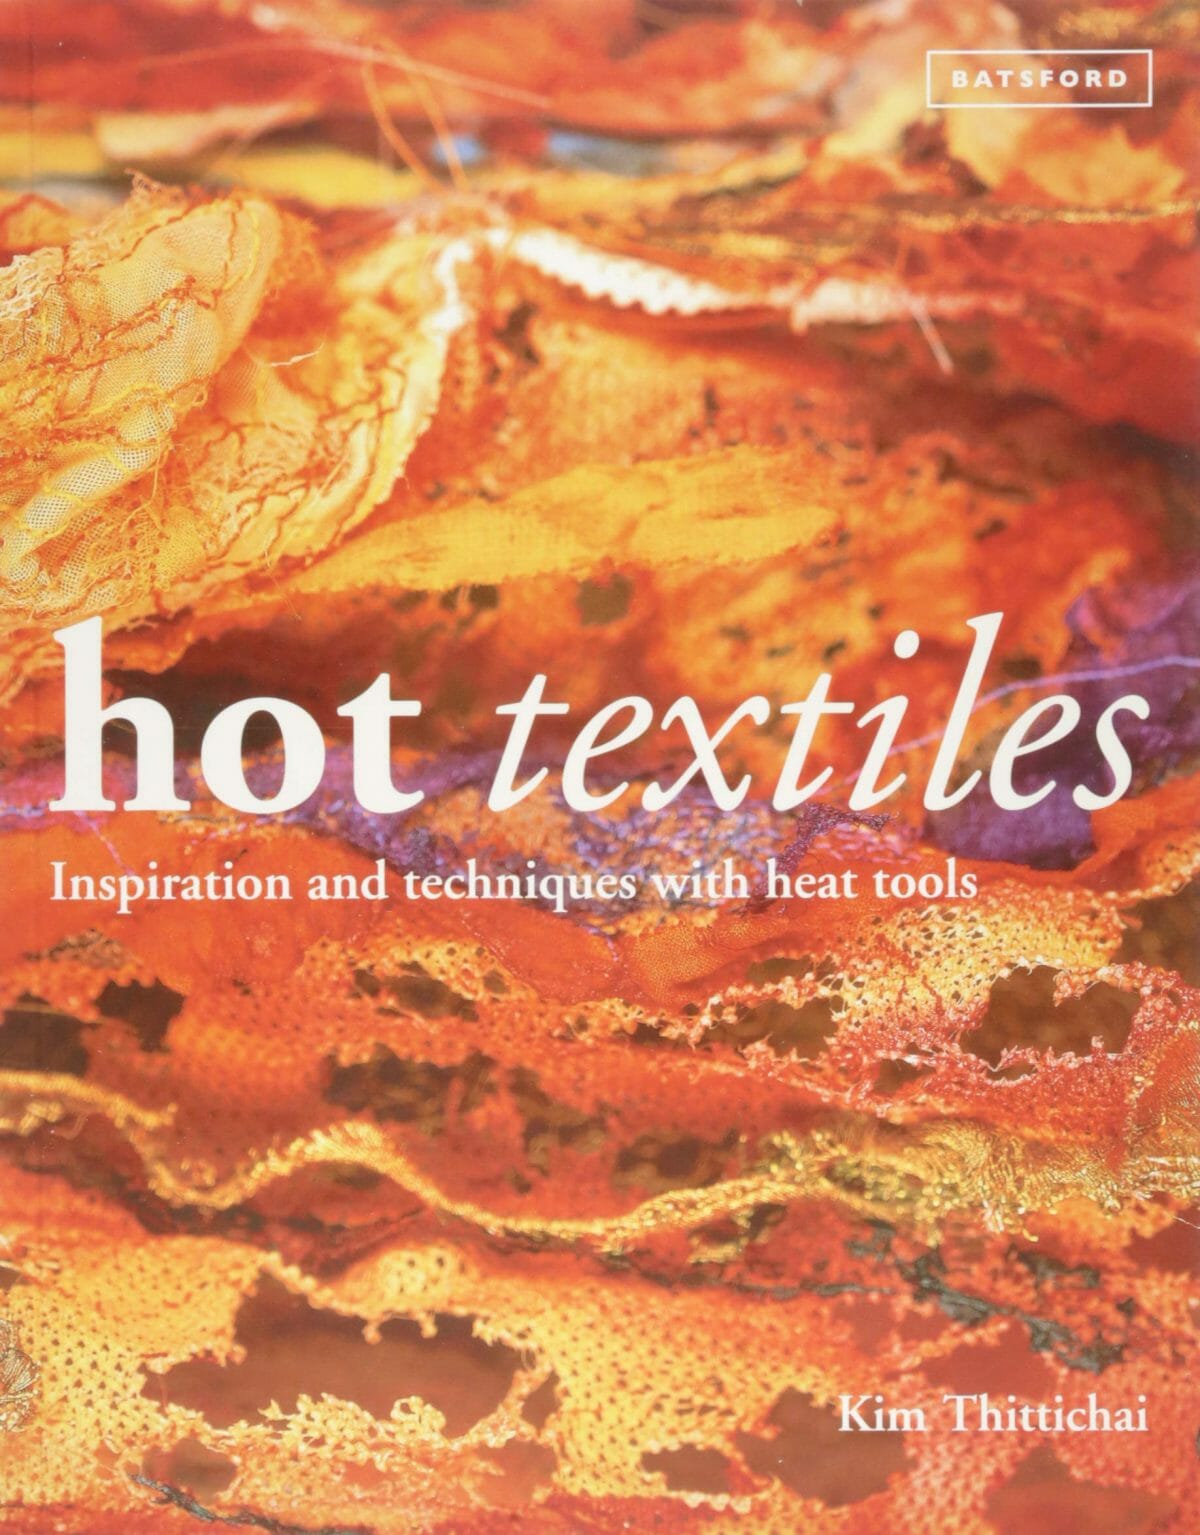 Book Review - Hot Textiles